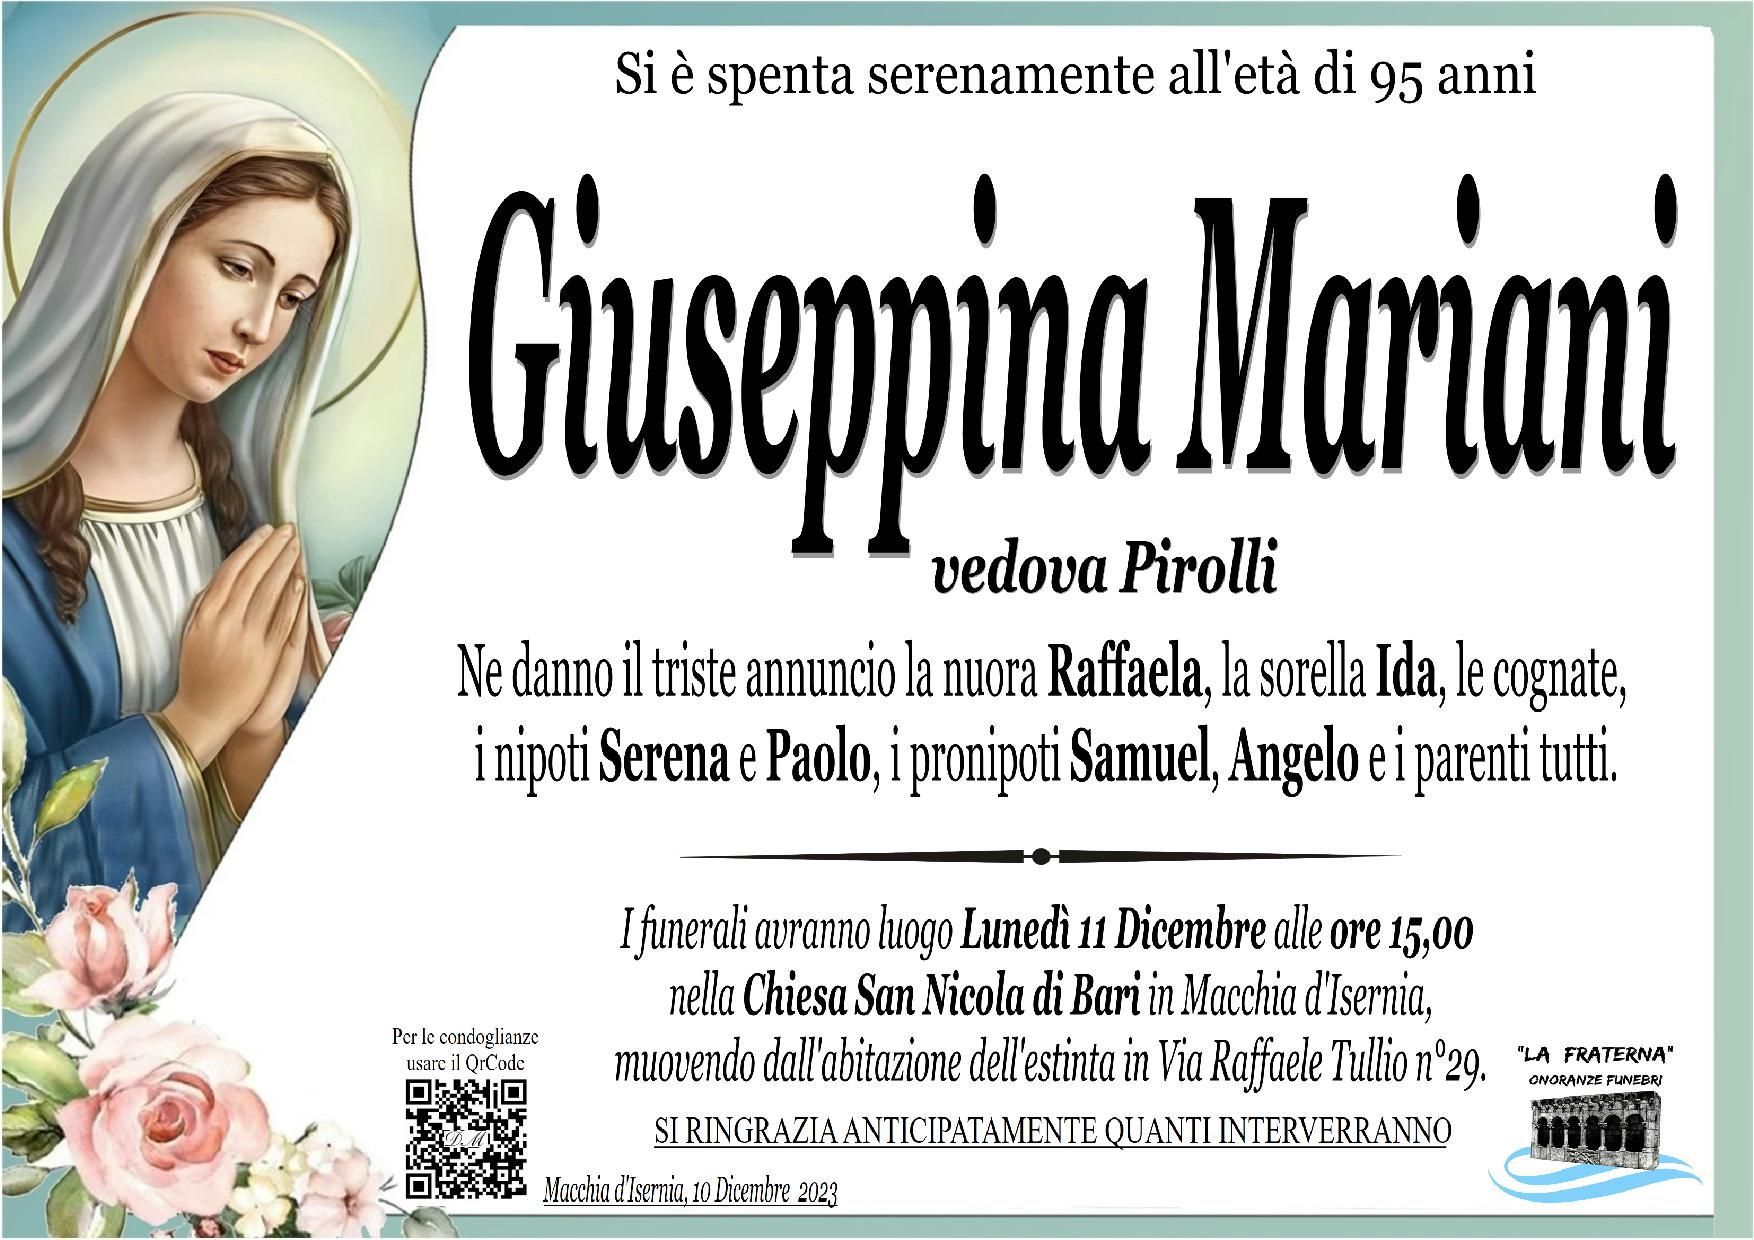 necrologio Giuseppina Mariani